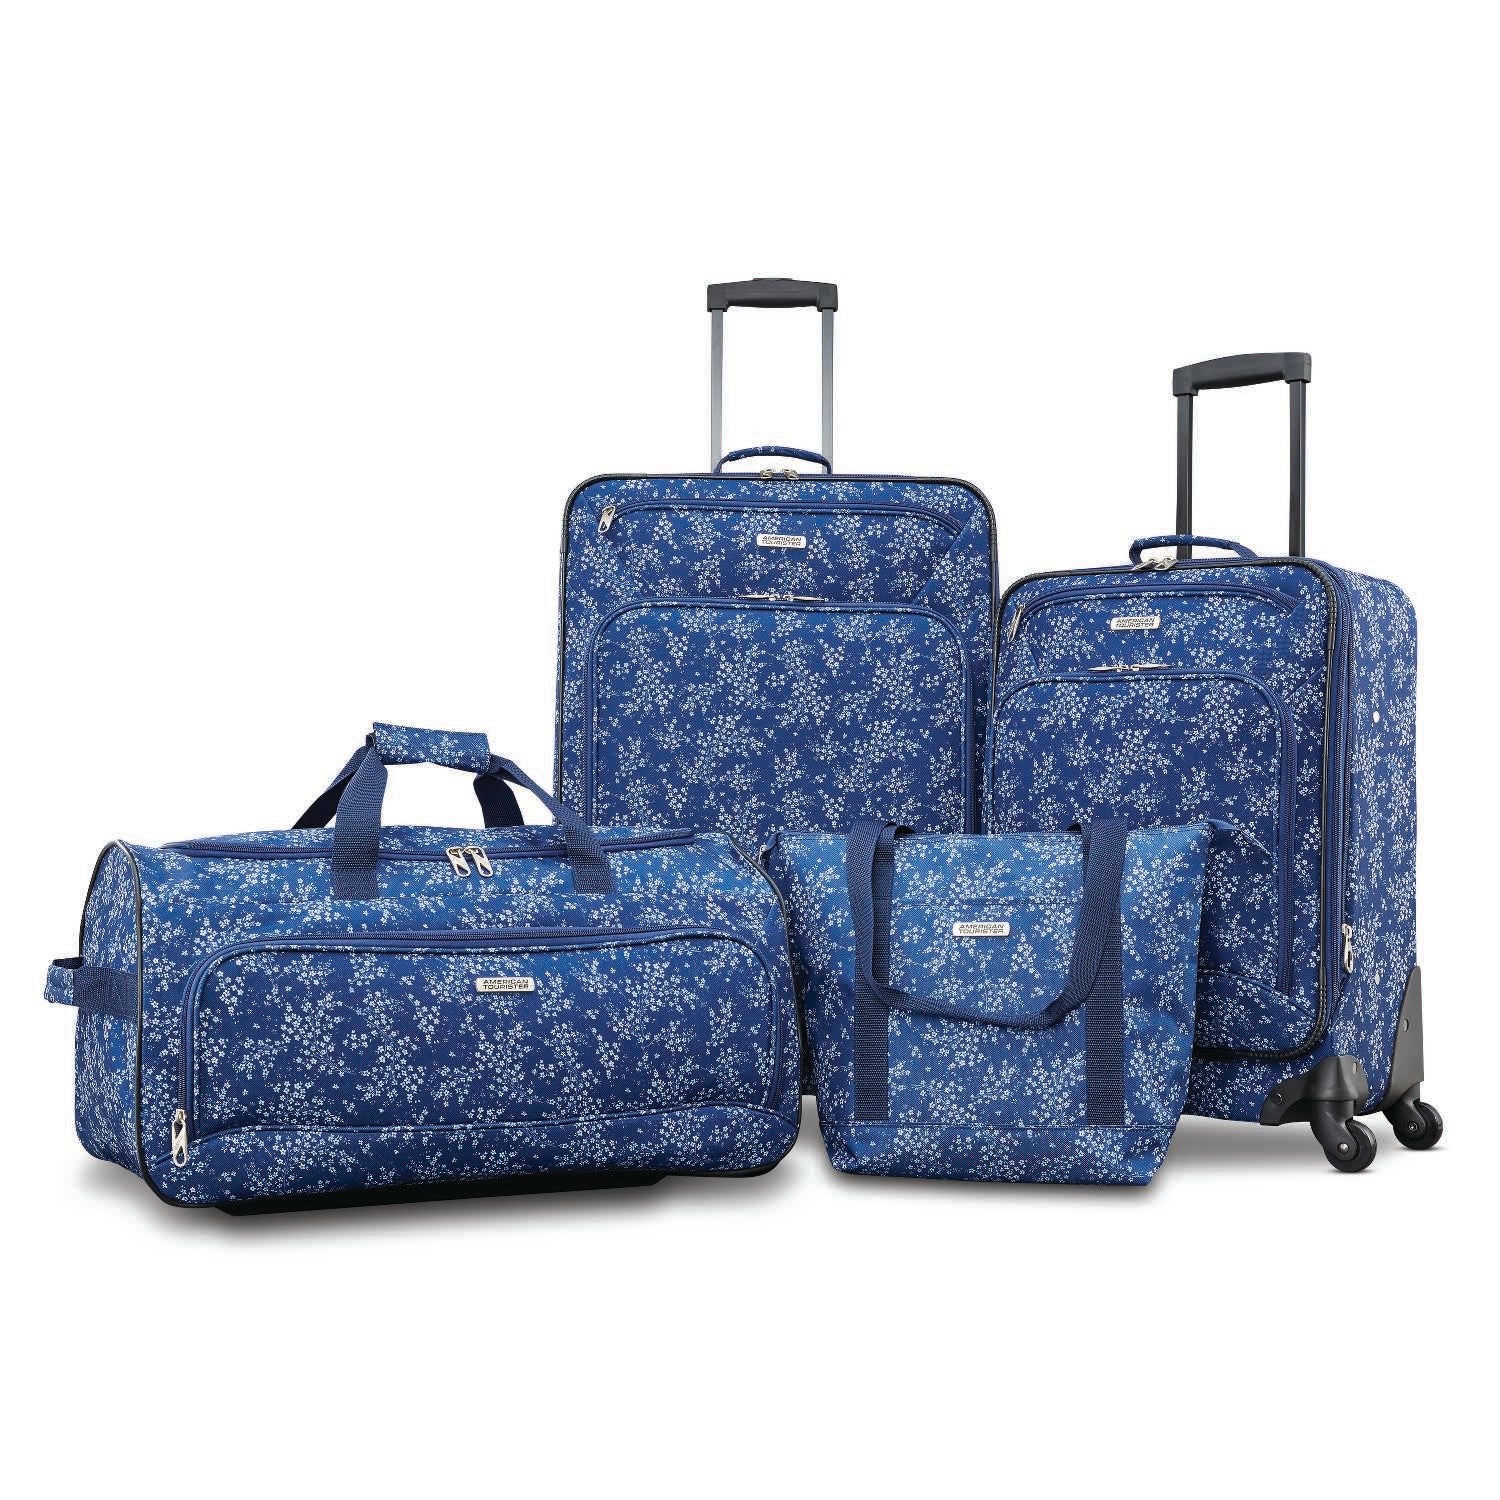 American Tourister Fieldbrook Xlt 4 Piece Set 2-Wheel Luggage Sets - Blue  Floral / 4 Piece Set